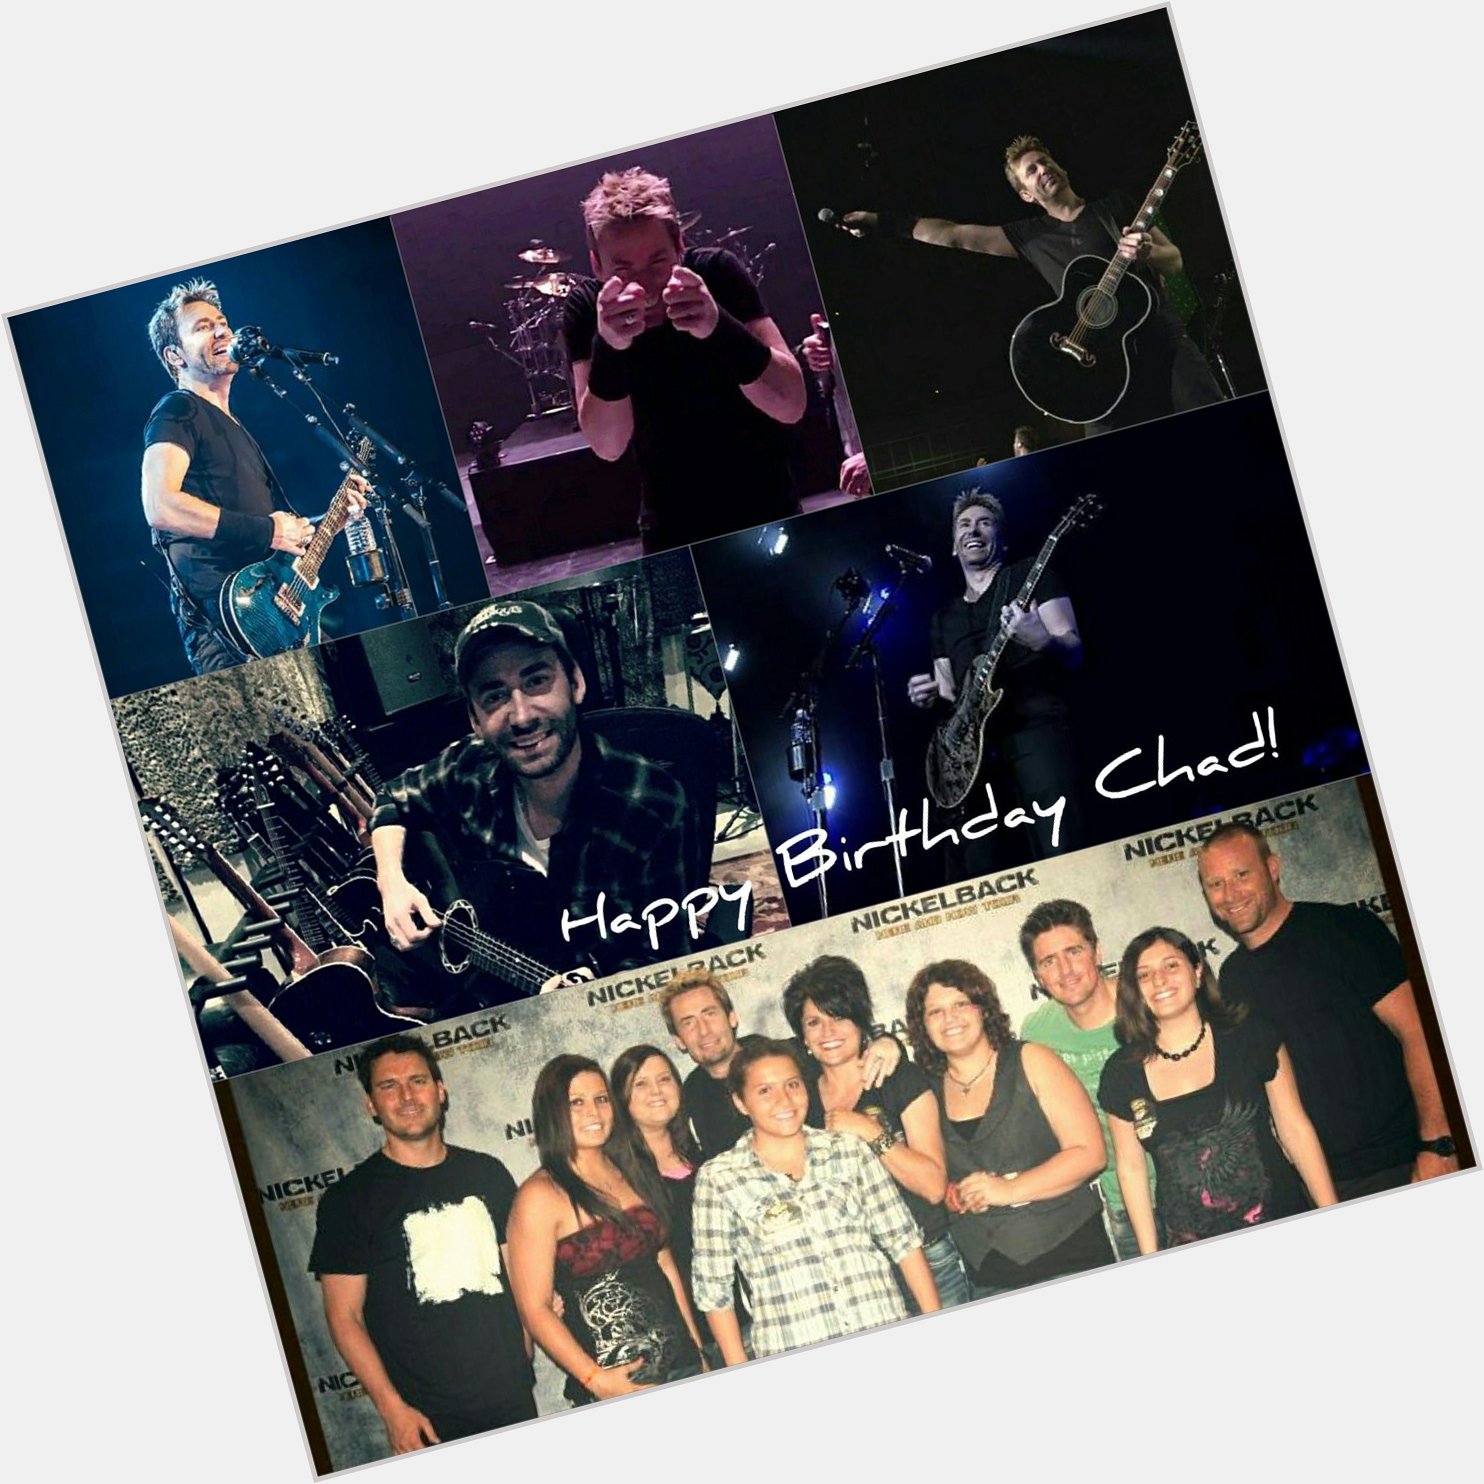  Happy birthday 41th to my favorite rockstar Chad Kroeger!   